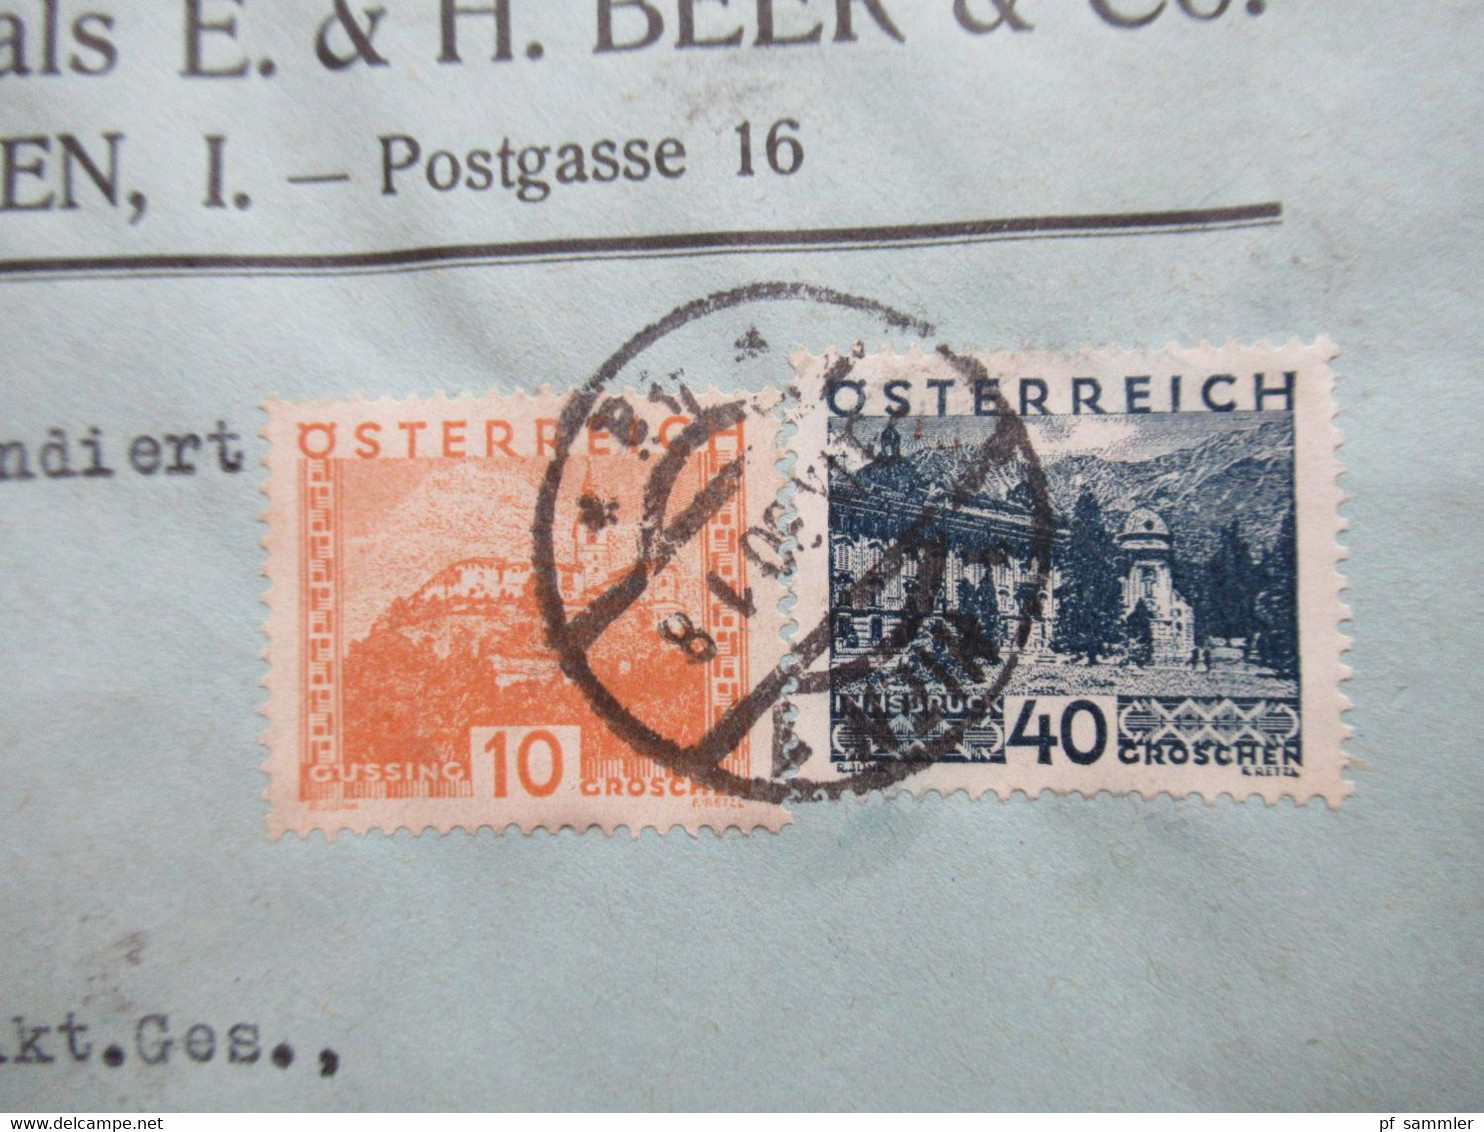 1930 Landschaften Nr. 498 U. 507 MiF Einschreiben Wien 1 Krawatten Fabrik H. Beer & Co. Rückseitig 3x Gesiegelt - Lettres & Documents